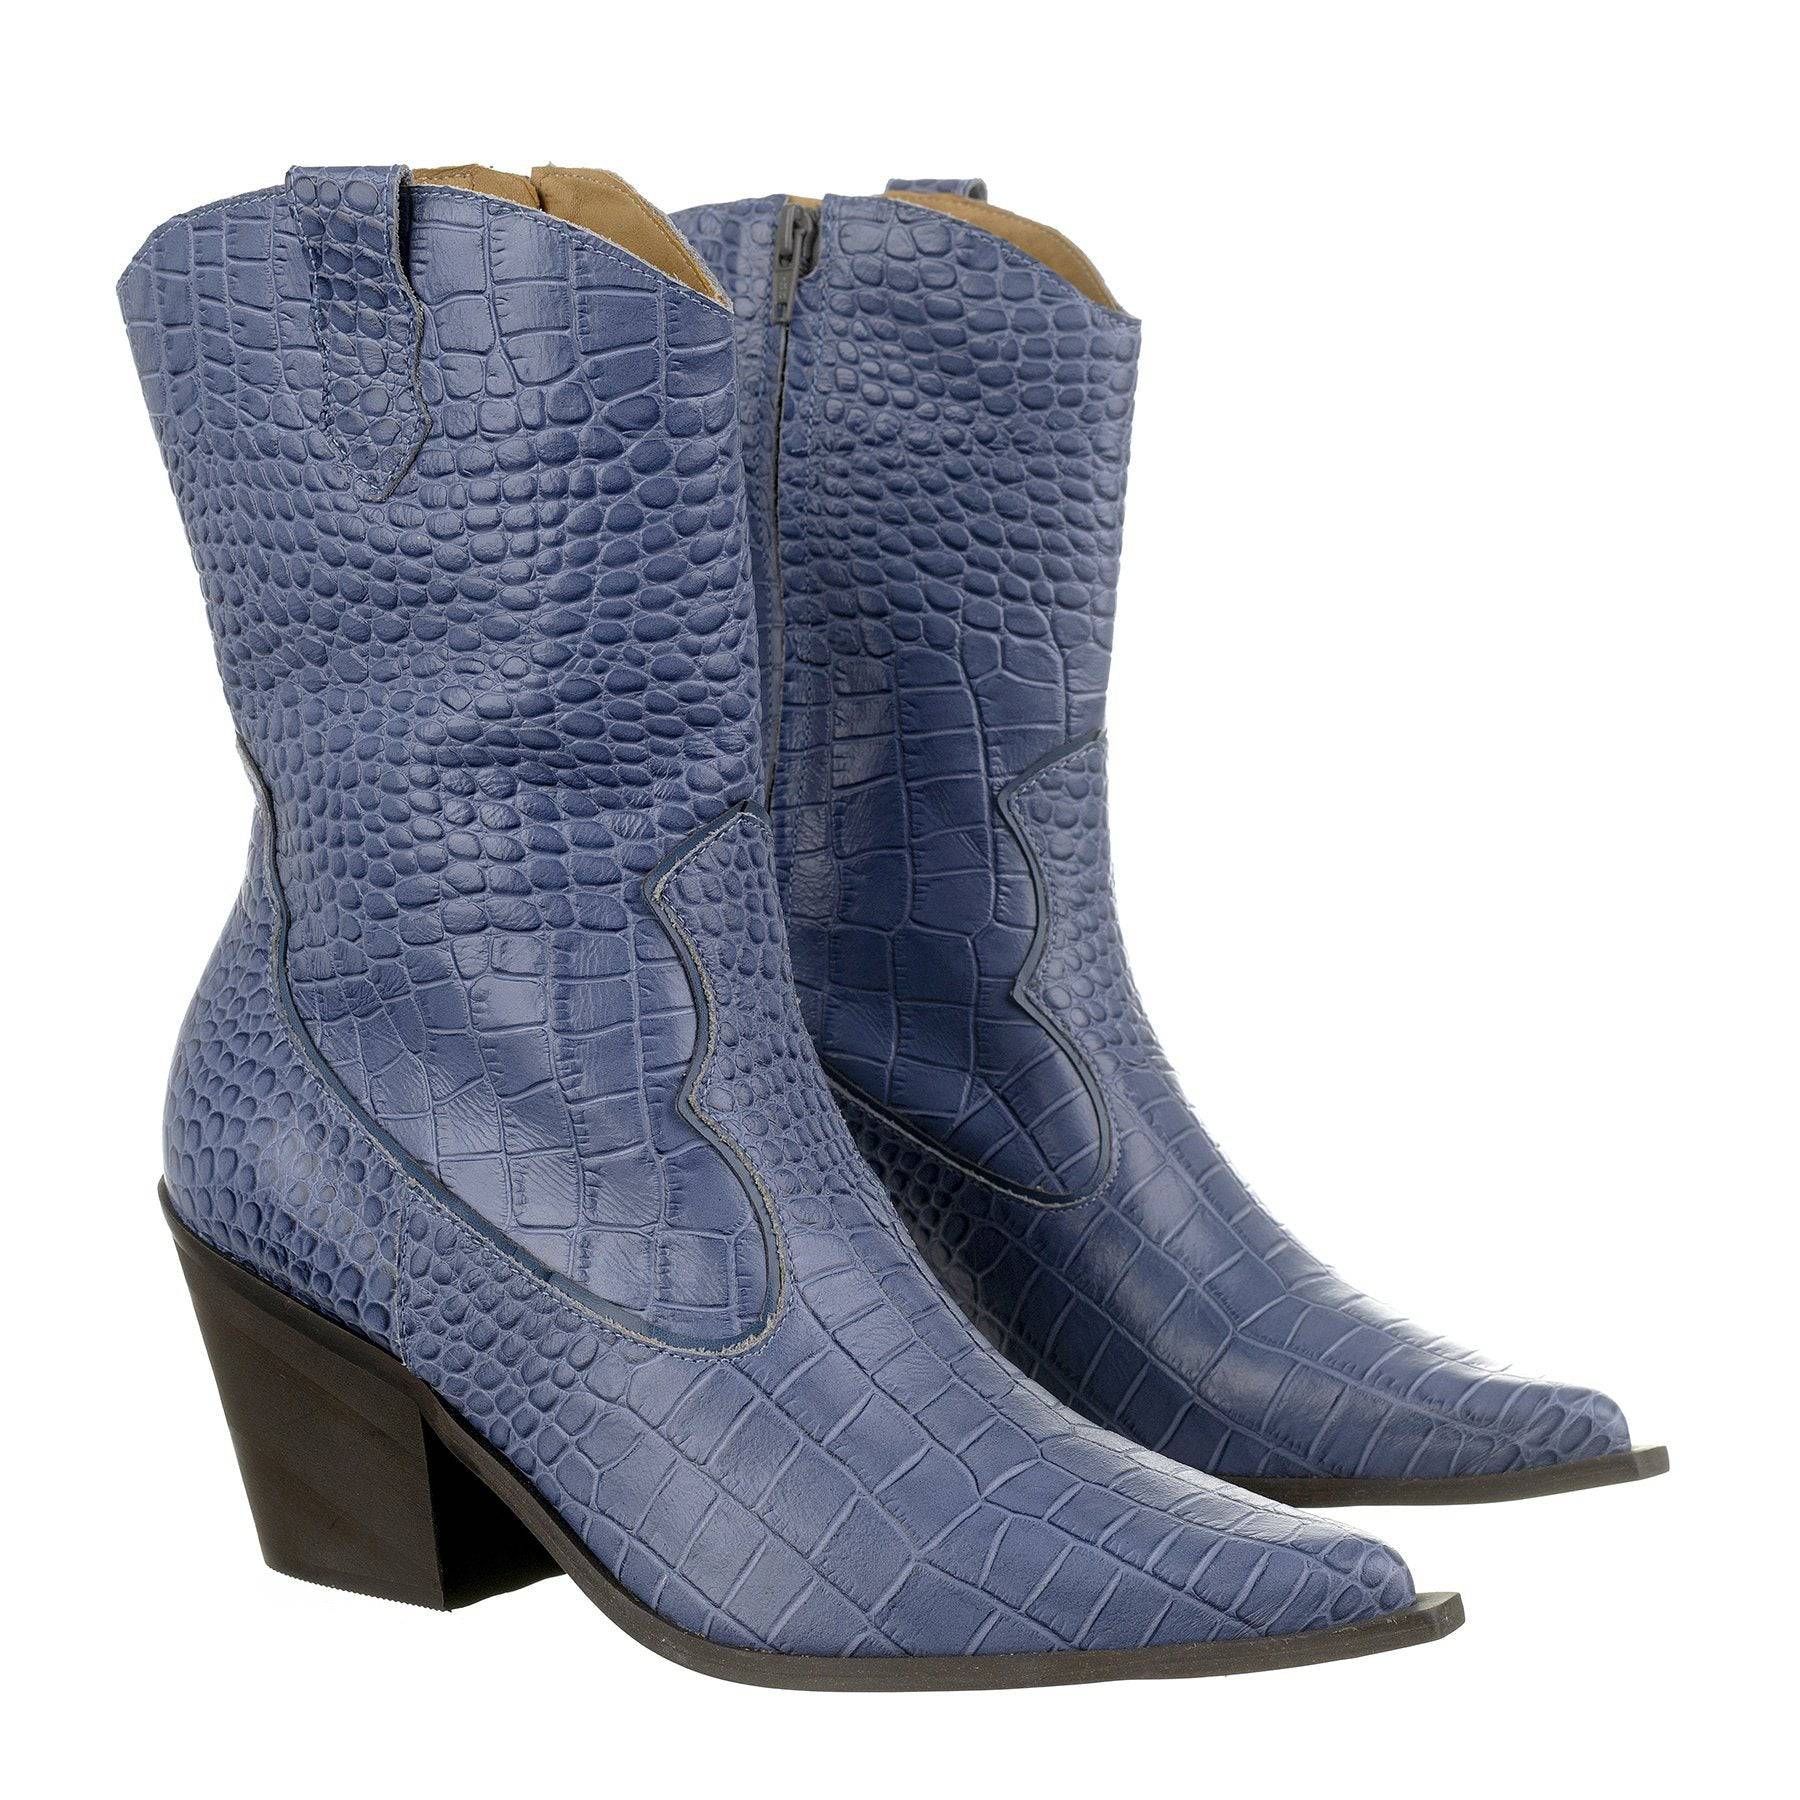 Lady - Western Mid-Calf Cowgirl Boots (Blue Denim Shade) - Juliana Heels 